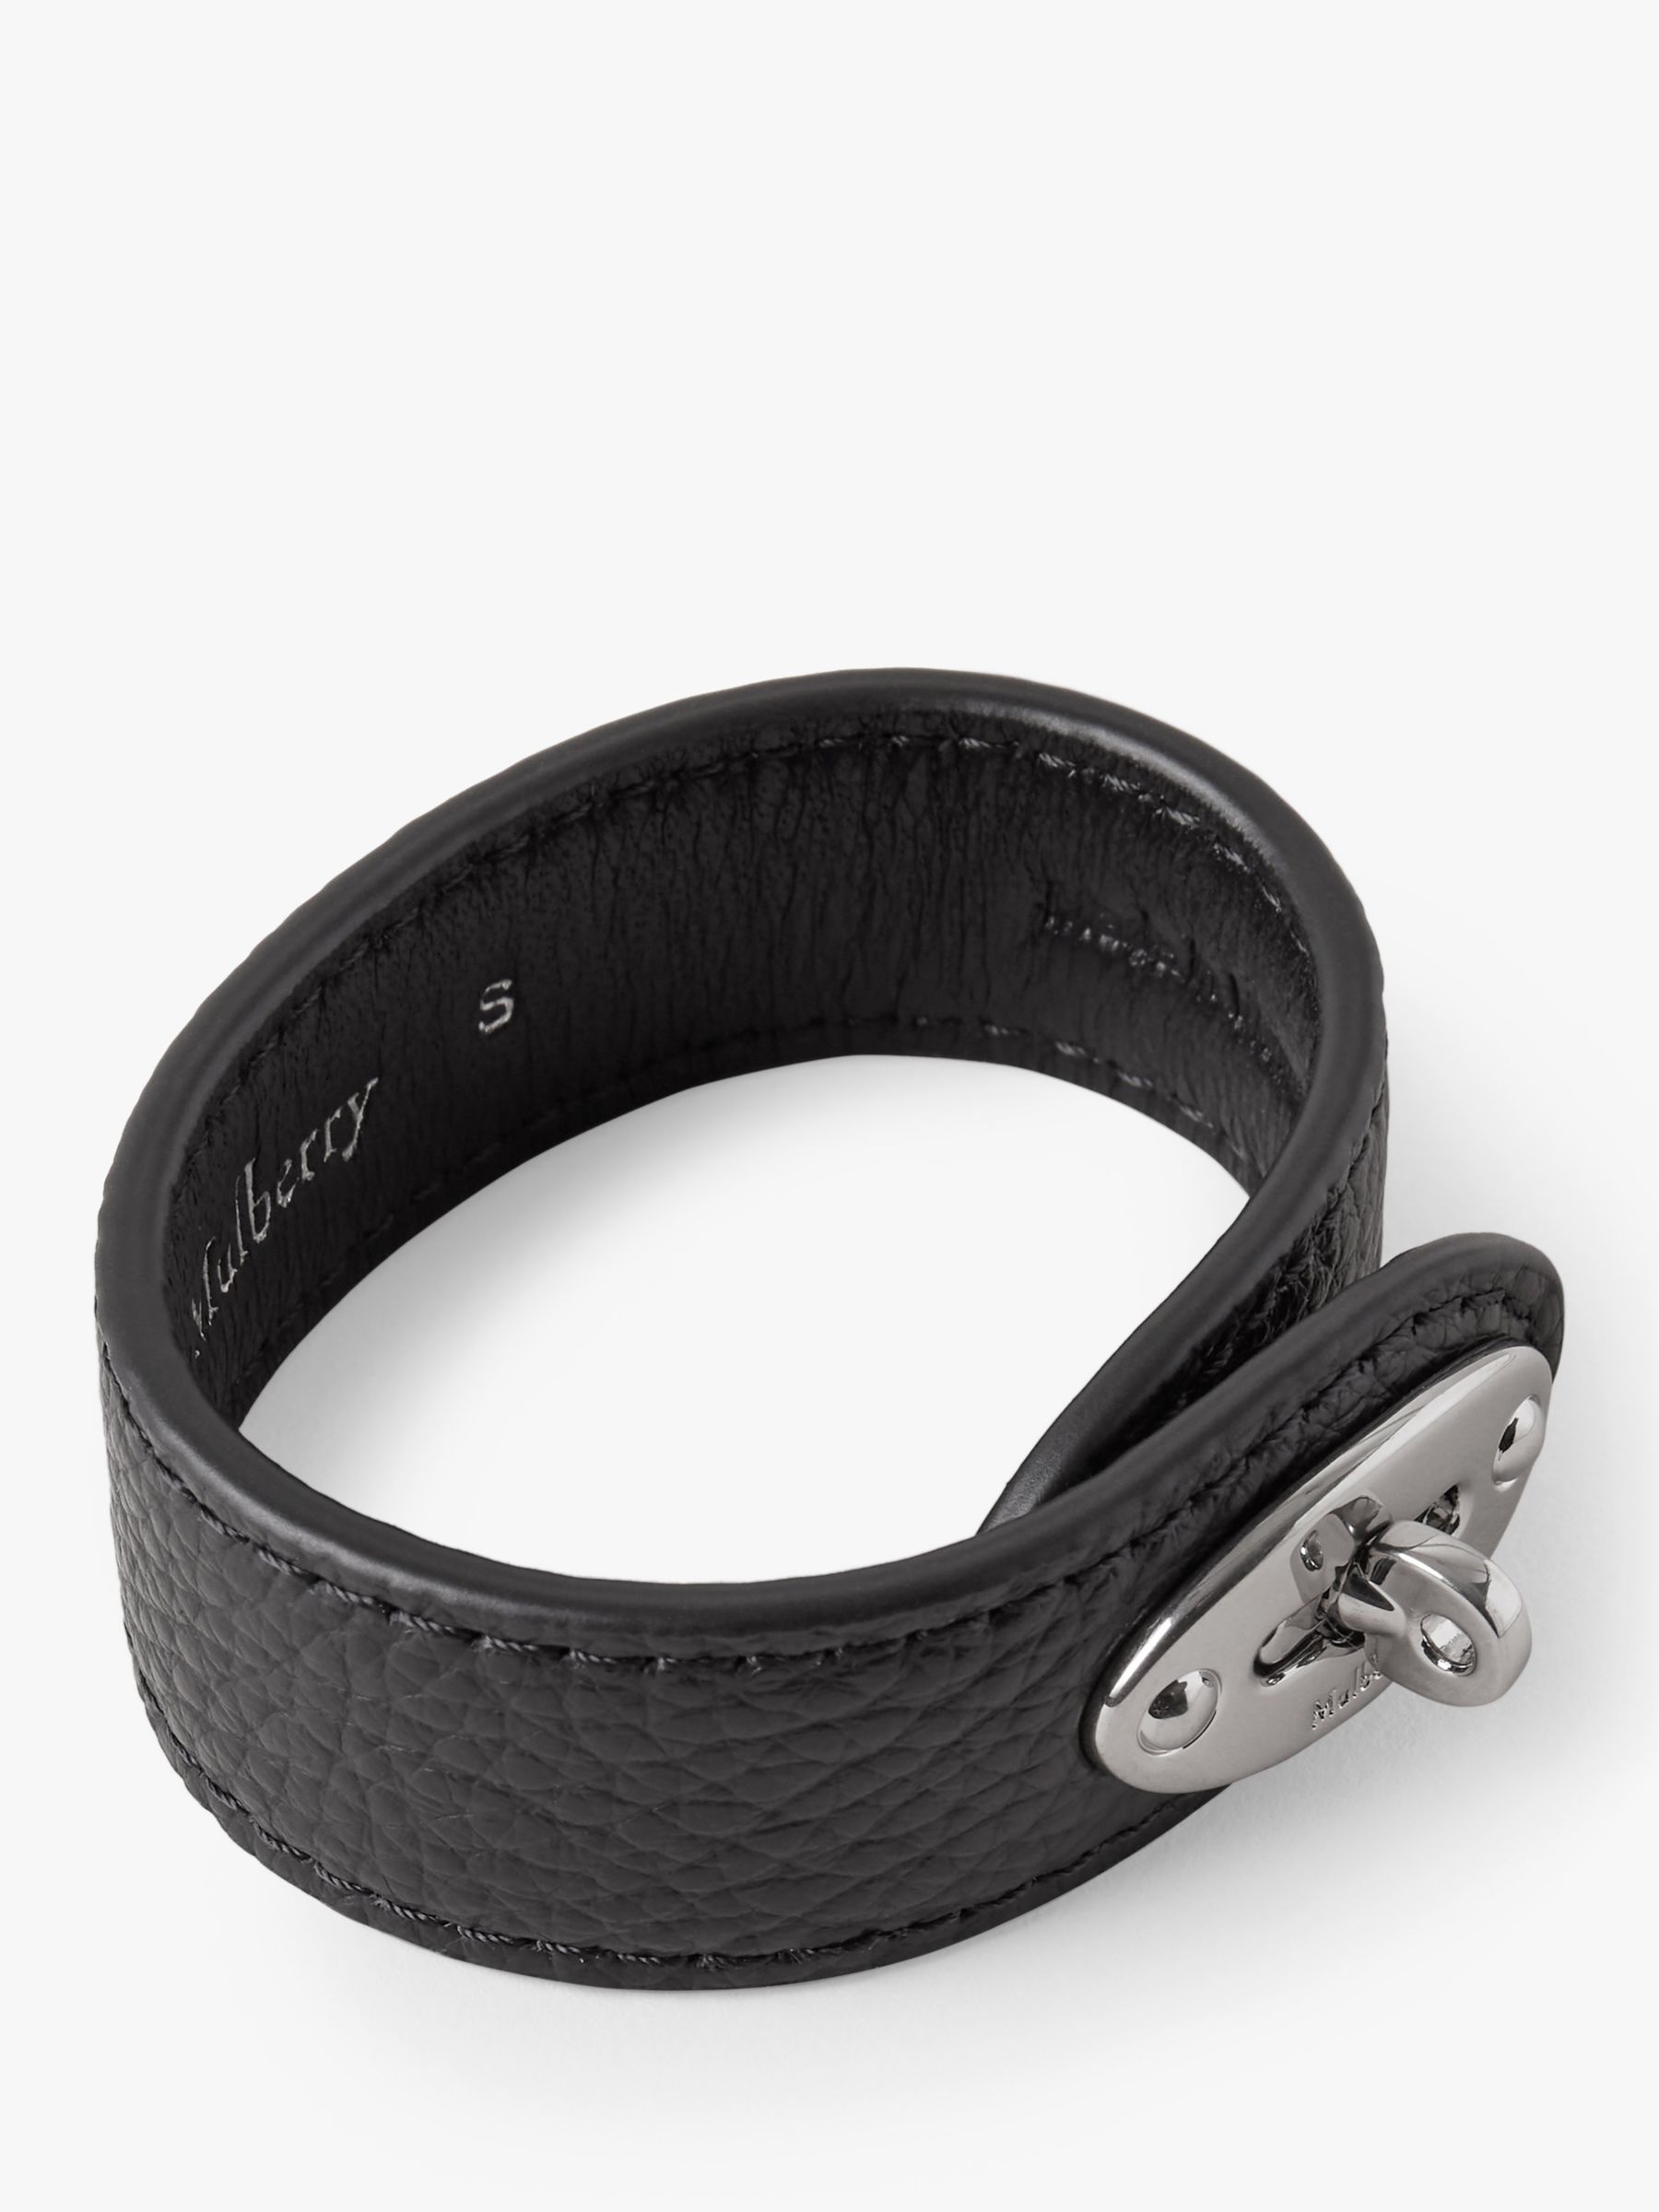 Mulberry Bayswater Leather Bracelet, Black/Silver, Small: L15.7 x W2cm ...